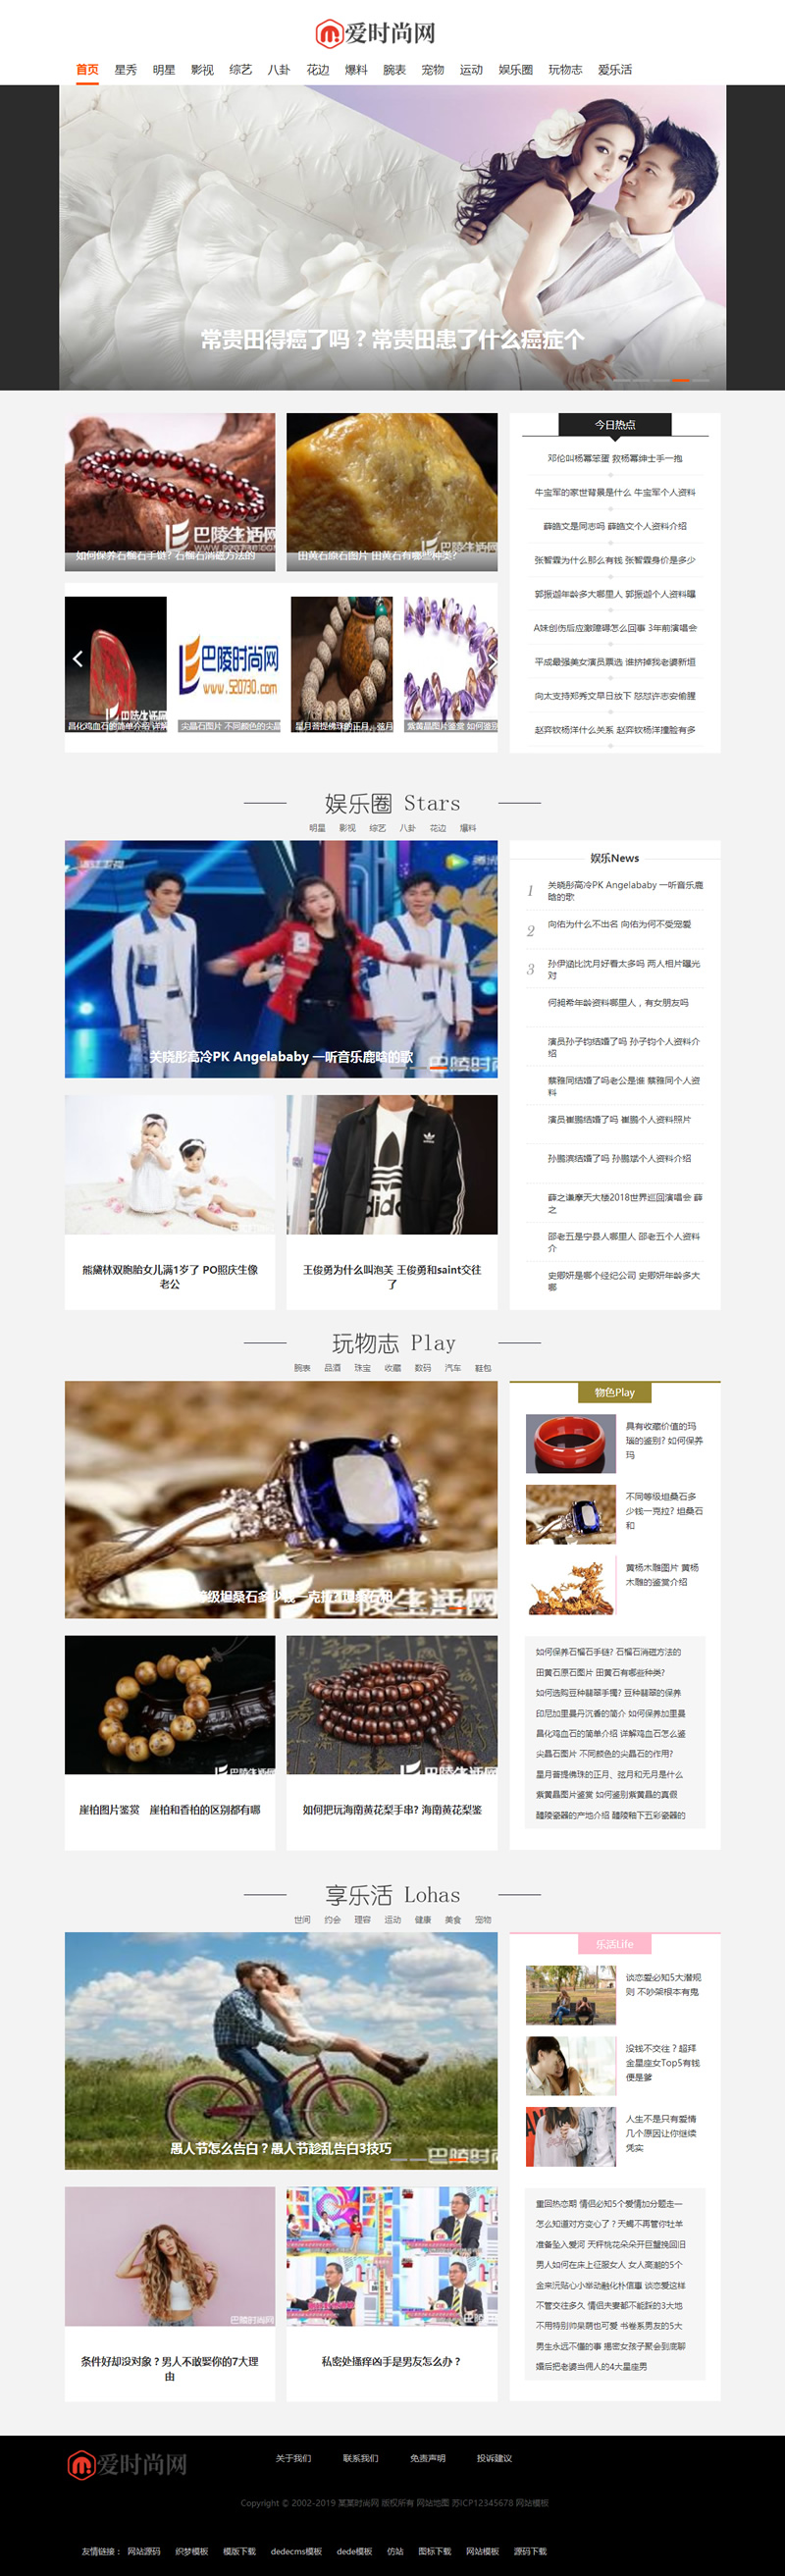 M018 织梦dedecms时尚新闻资讯网站模板(带手机移动端)